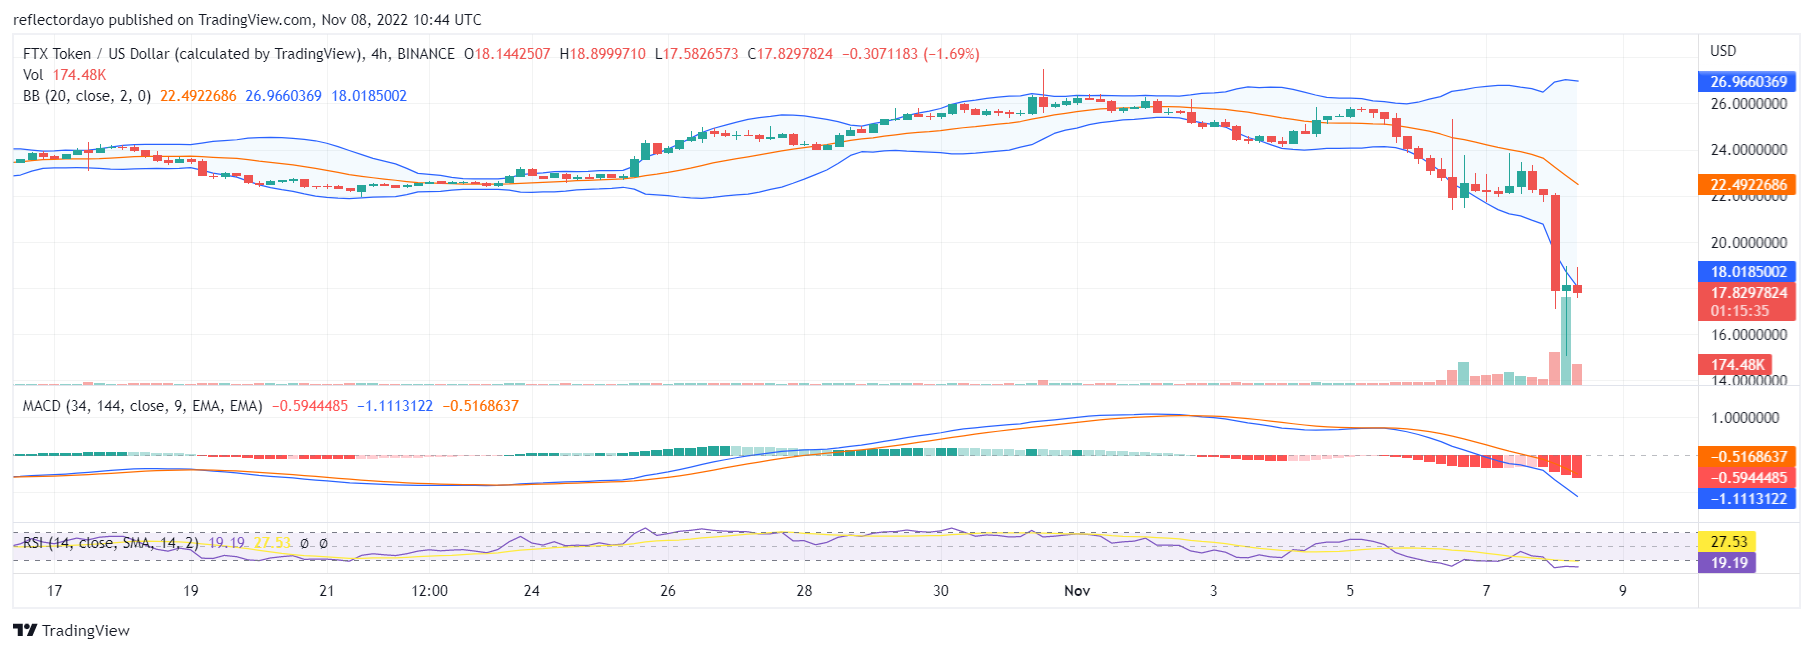 FTX Token Price Prediction for Today, November 5: FTT/USD Bears Market